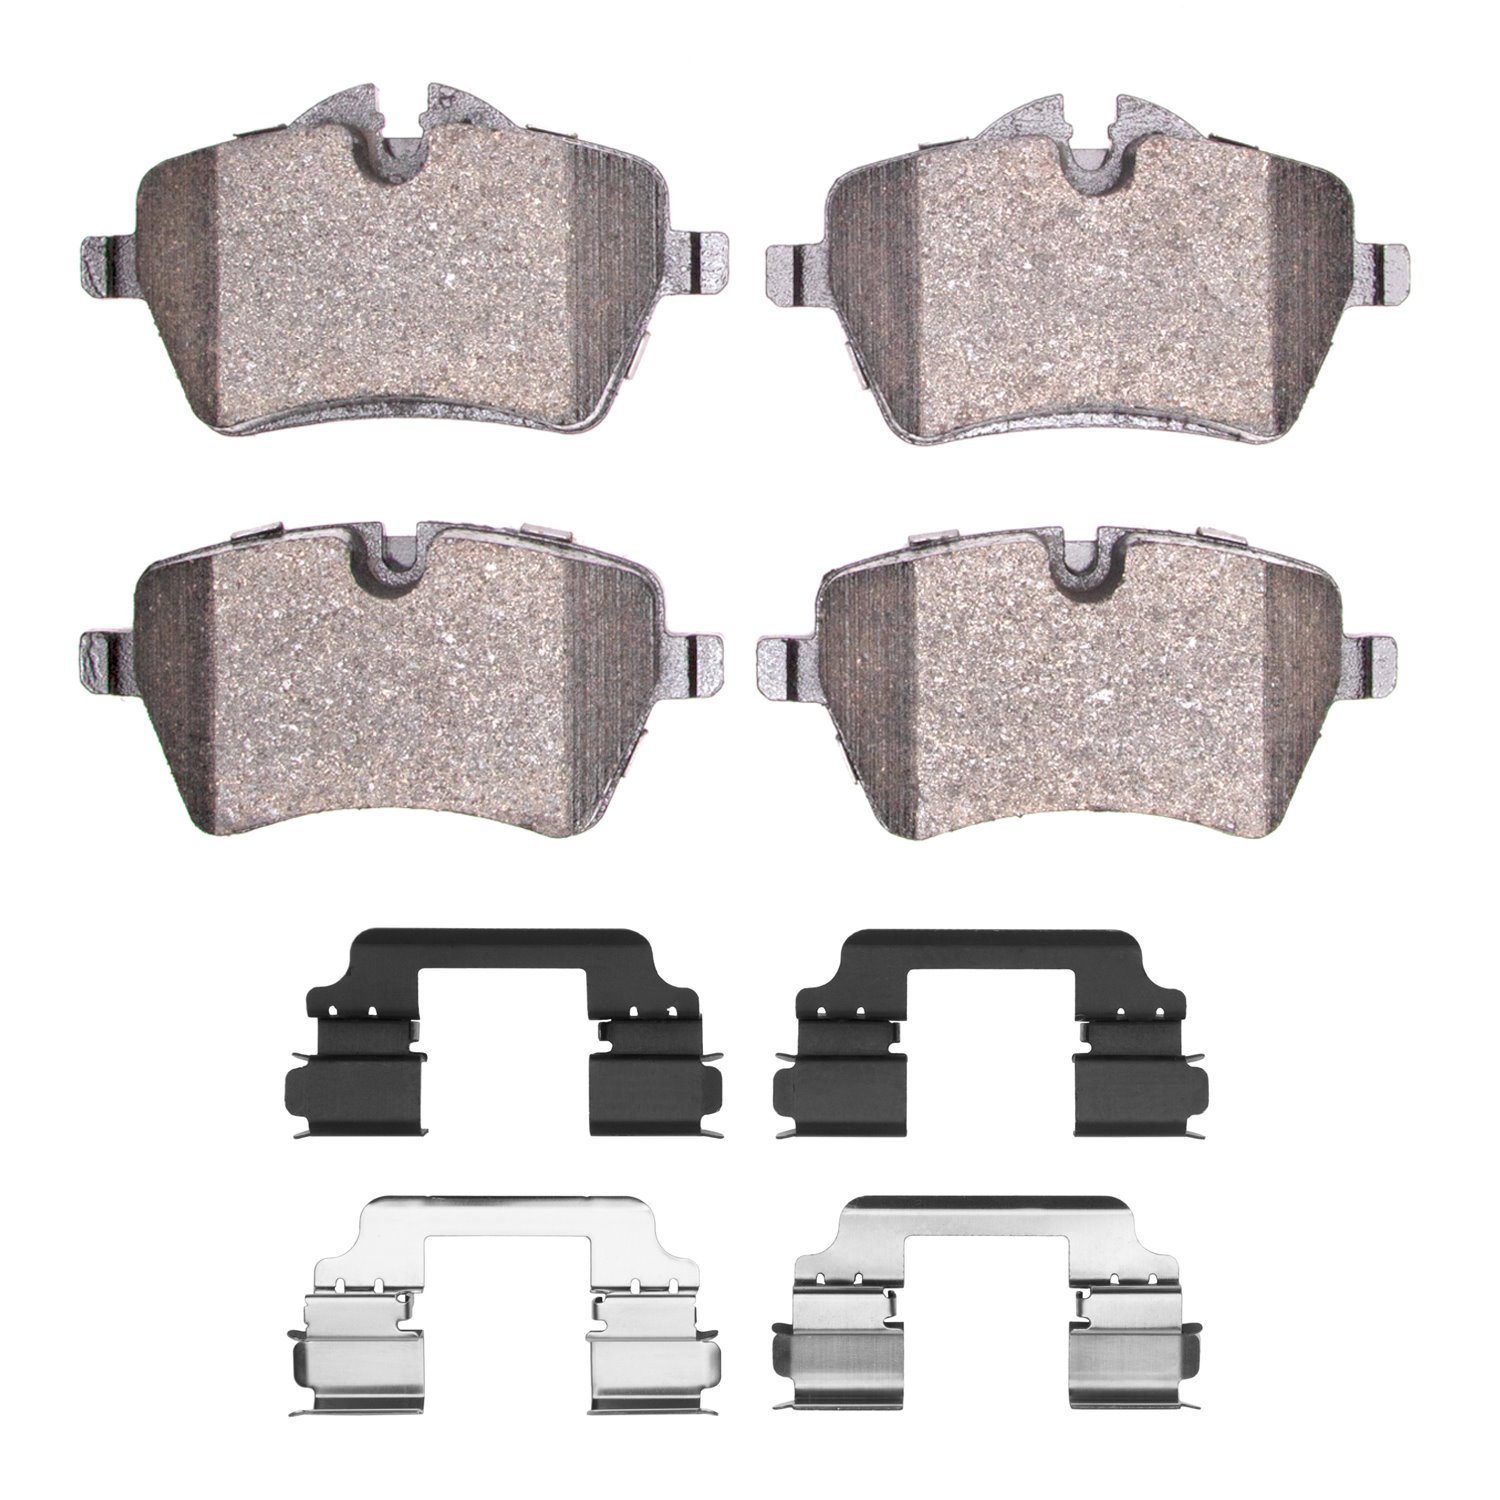 1310-1204-02 3000-Series Ceramic Brake Pads & Hardware Kit, 2011-2016 Mini, Position: Front